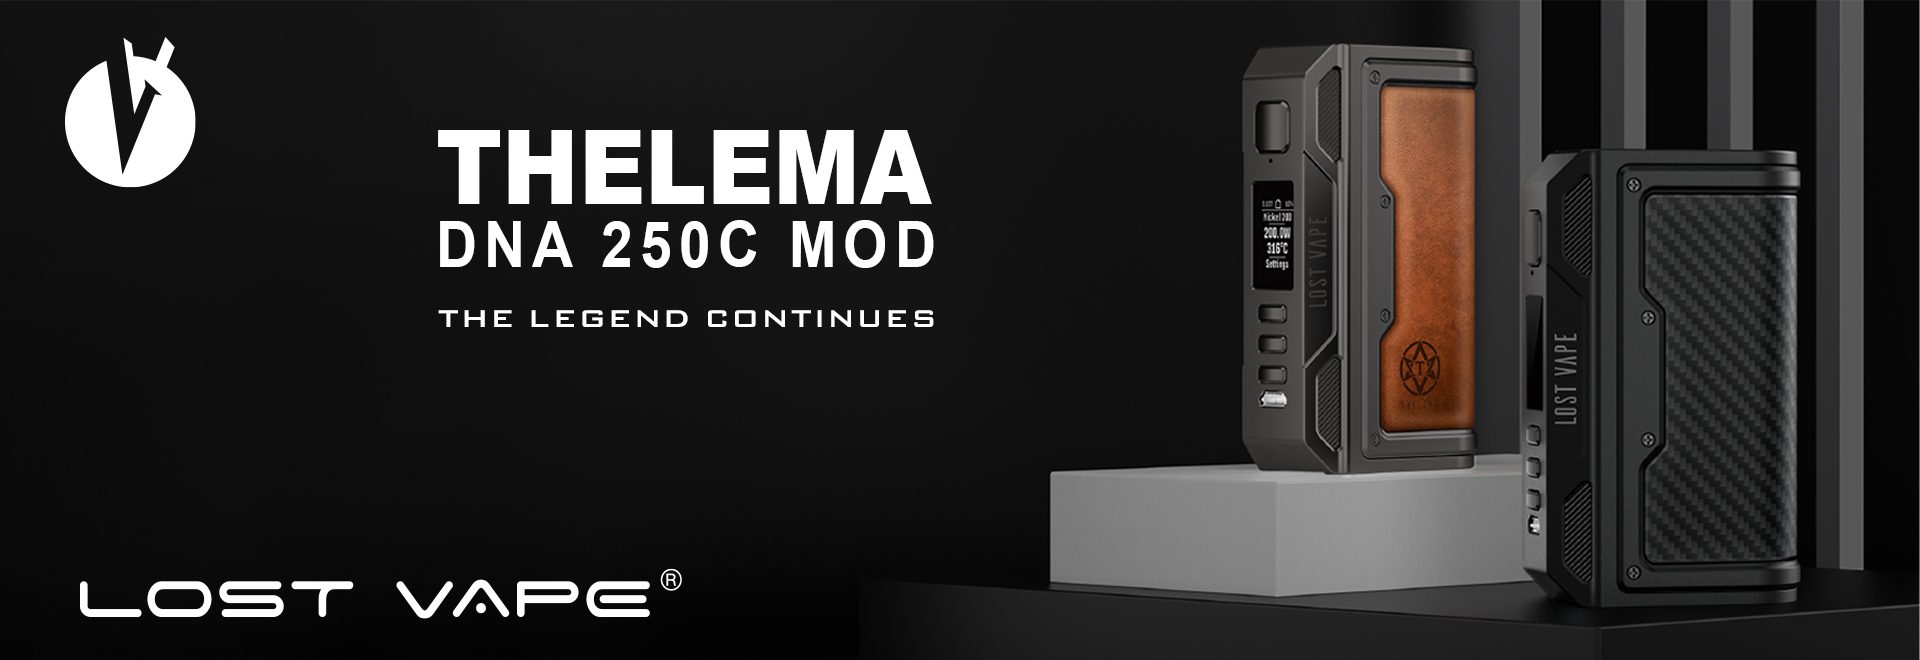 THELEMA DNA 250C MOD Banner 1920x660